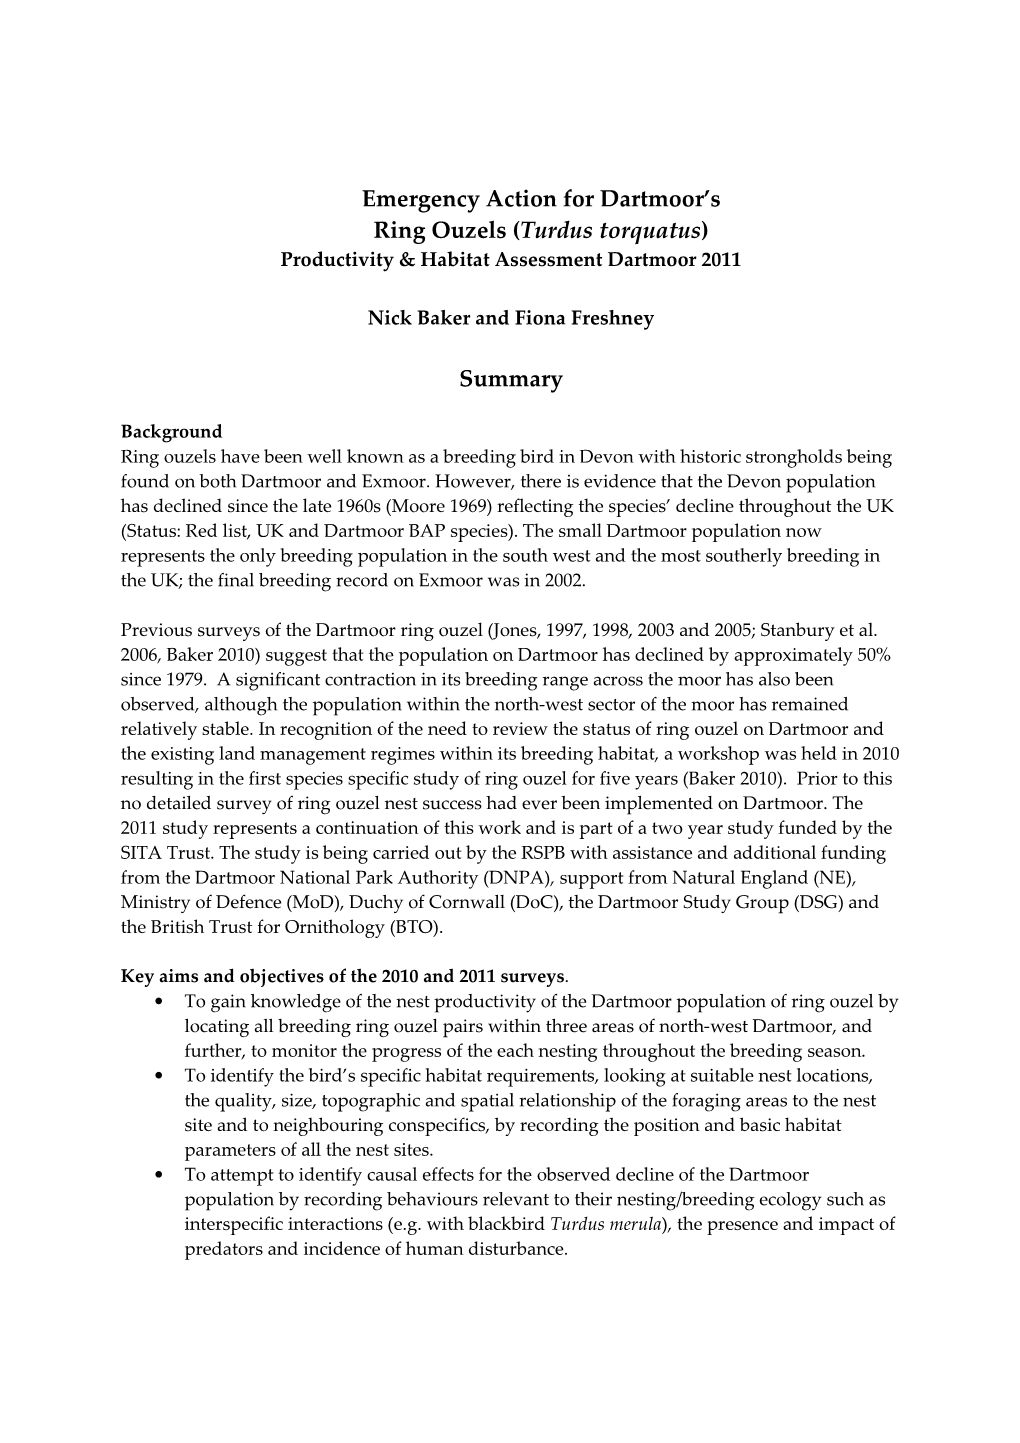 Emergency Action for Dartmoor's Ring Ouzels (Turdus Torquatus) Summary